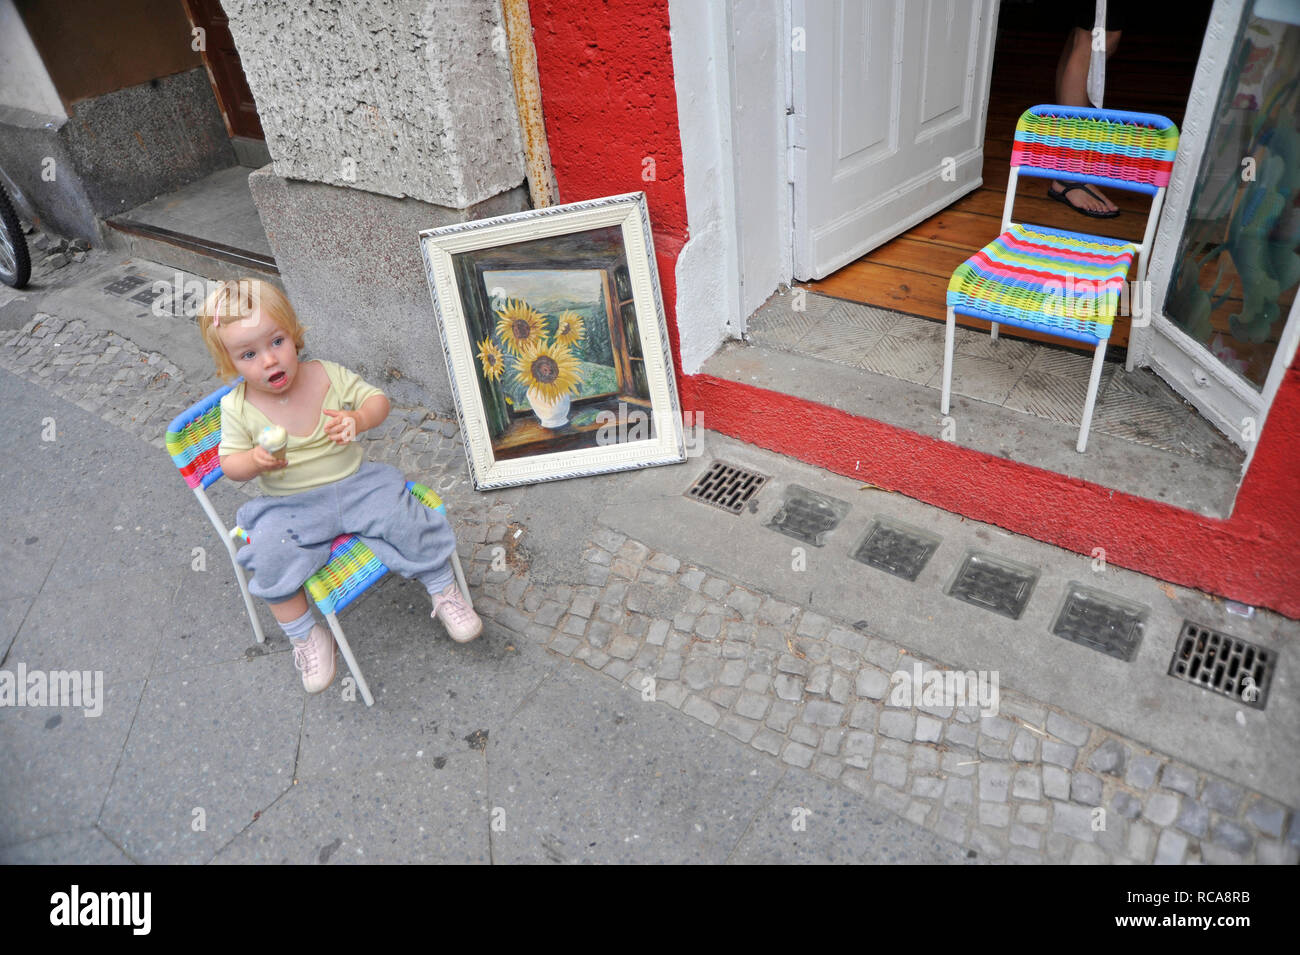 Kleinkind, Mädchen, 2 Jahre alt, isst Eis auf der Straße | bambino e bambina di due anni, mangia il gelato sulla strada Foto Stock